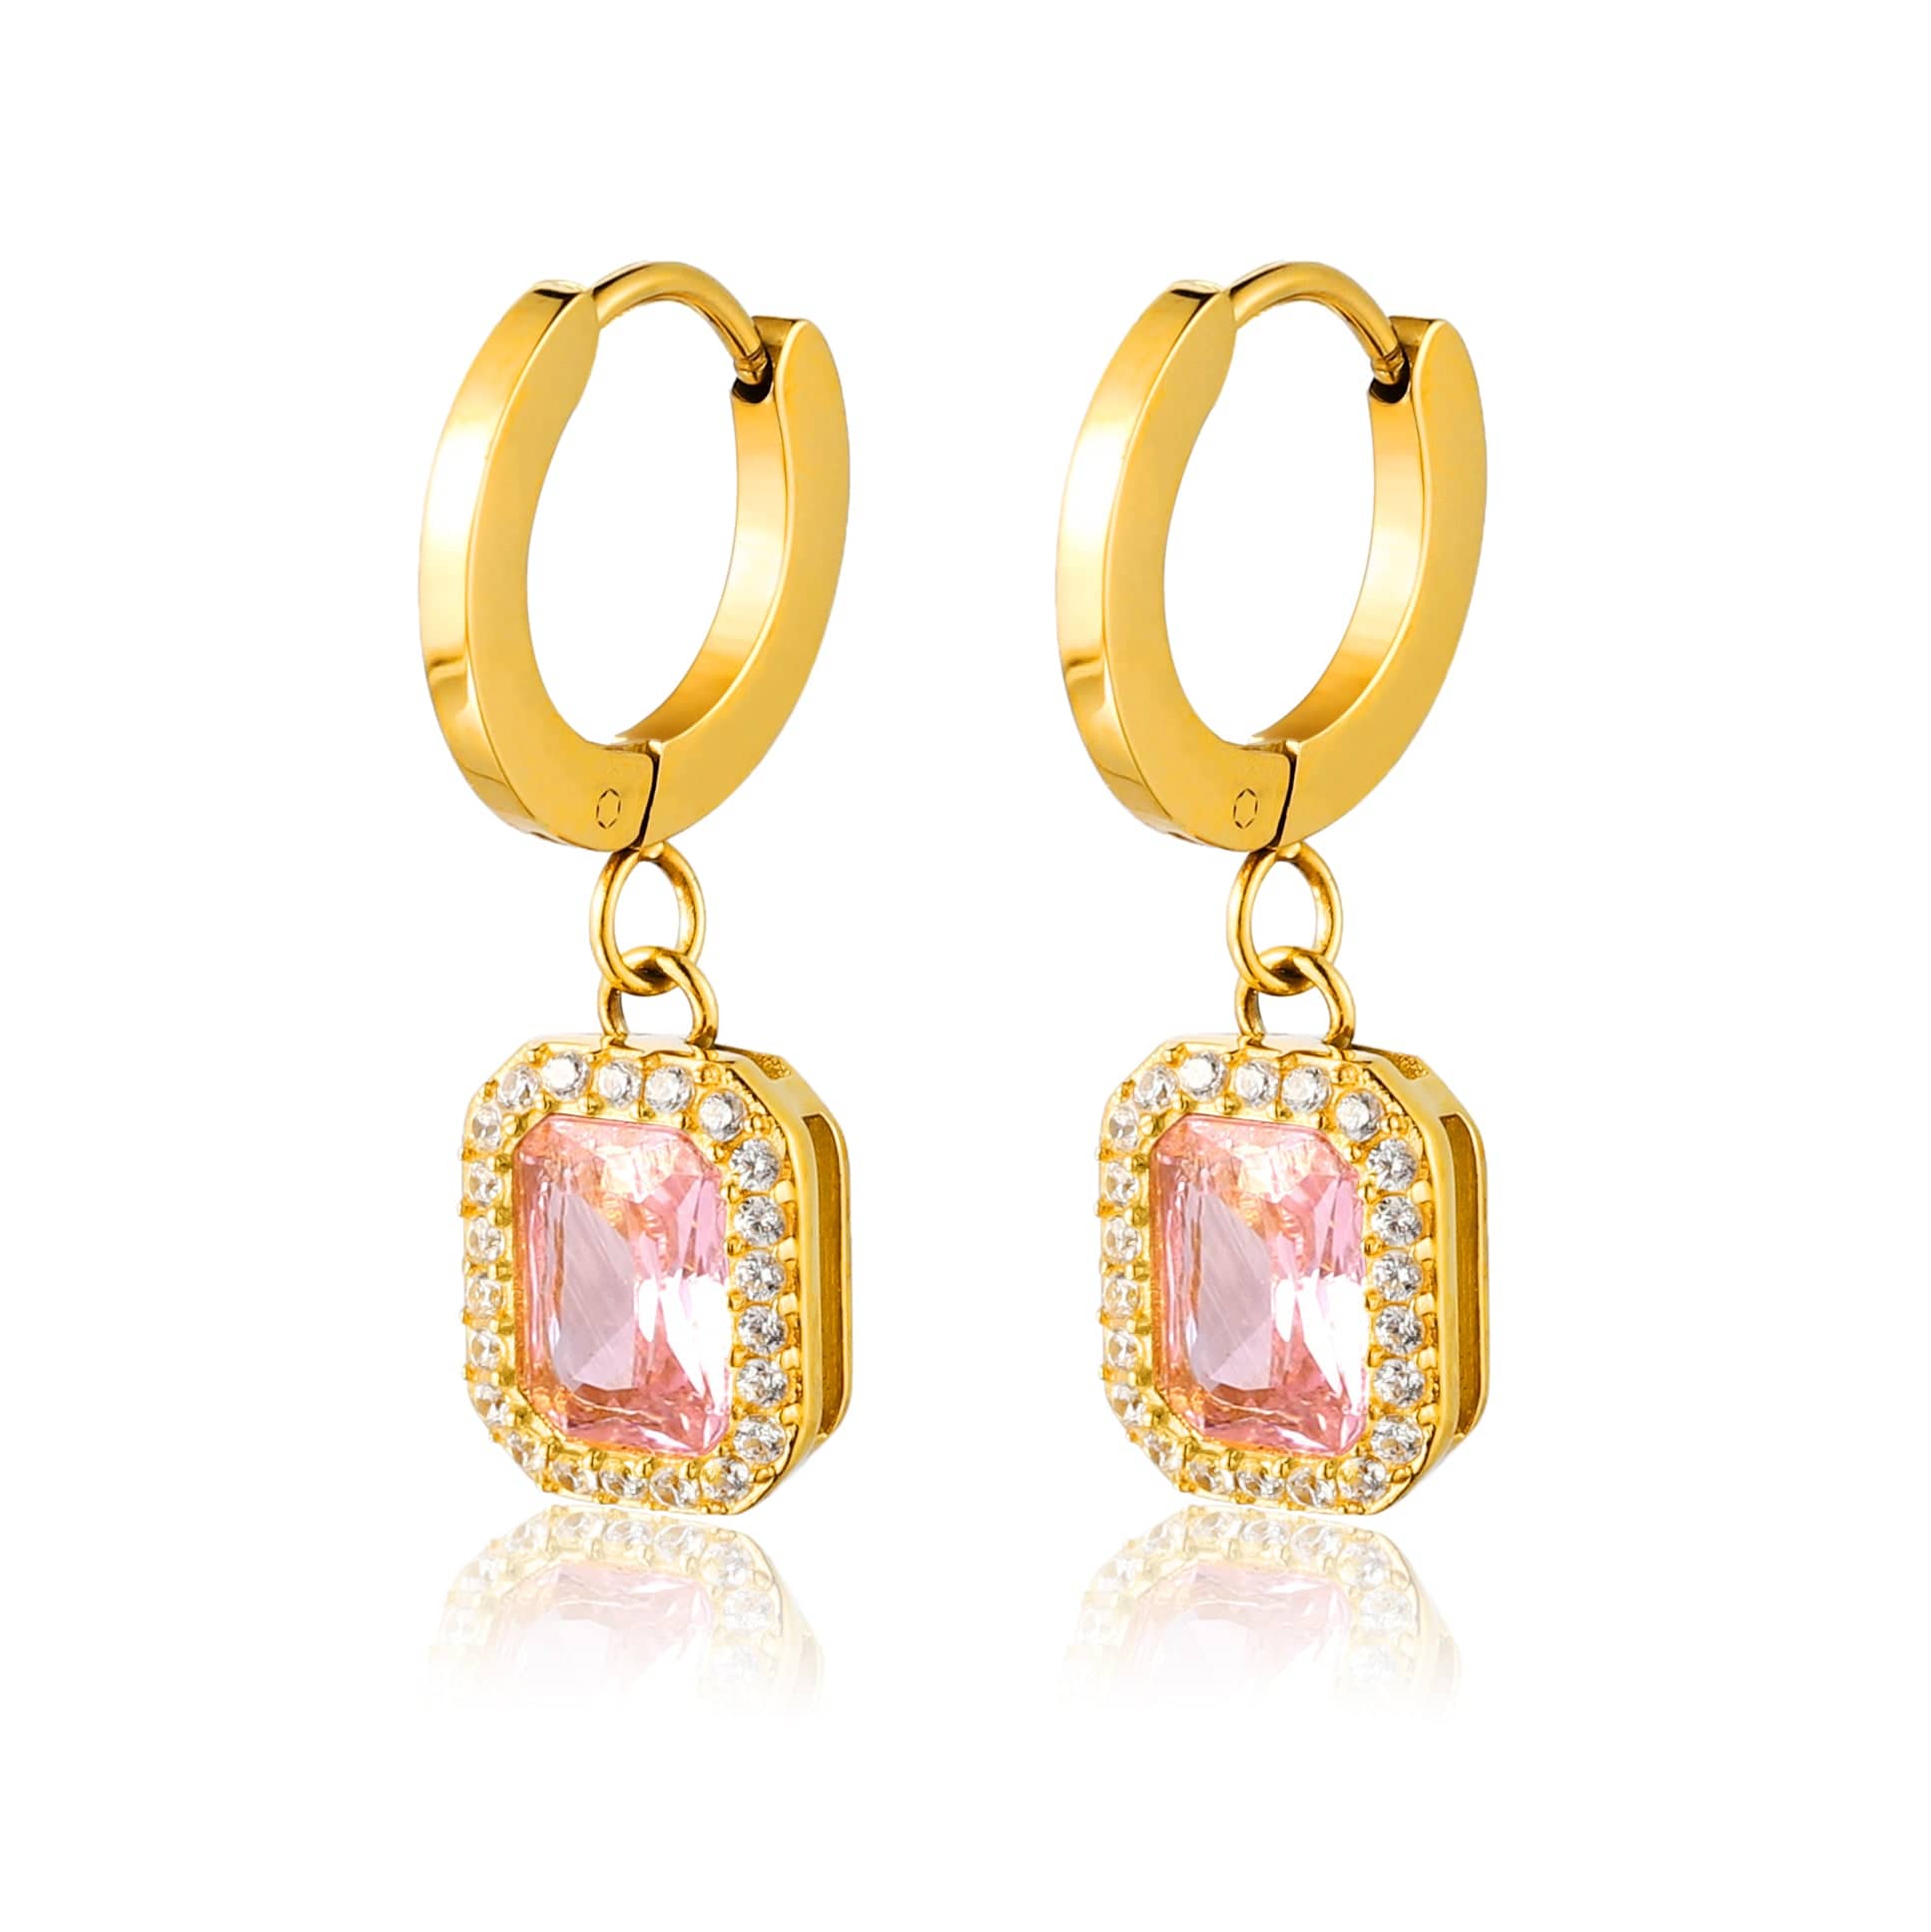 bianco rosso Enchanted Gemstone Bundle cyprus greece jewelry gift free shipping europe worldwide